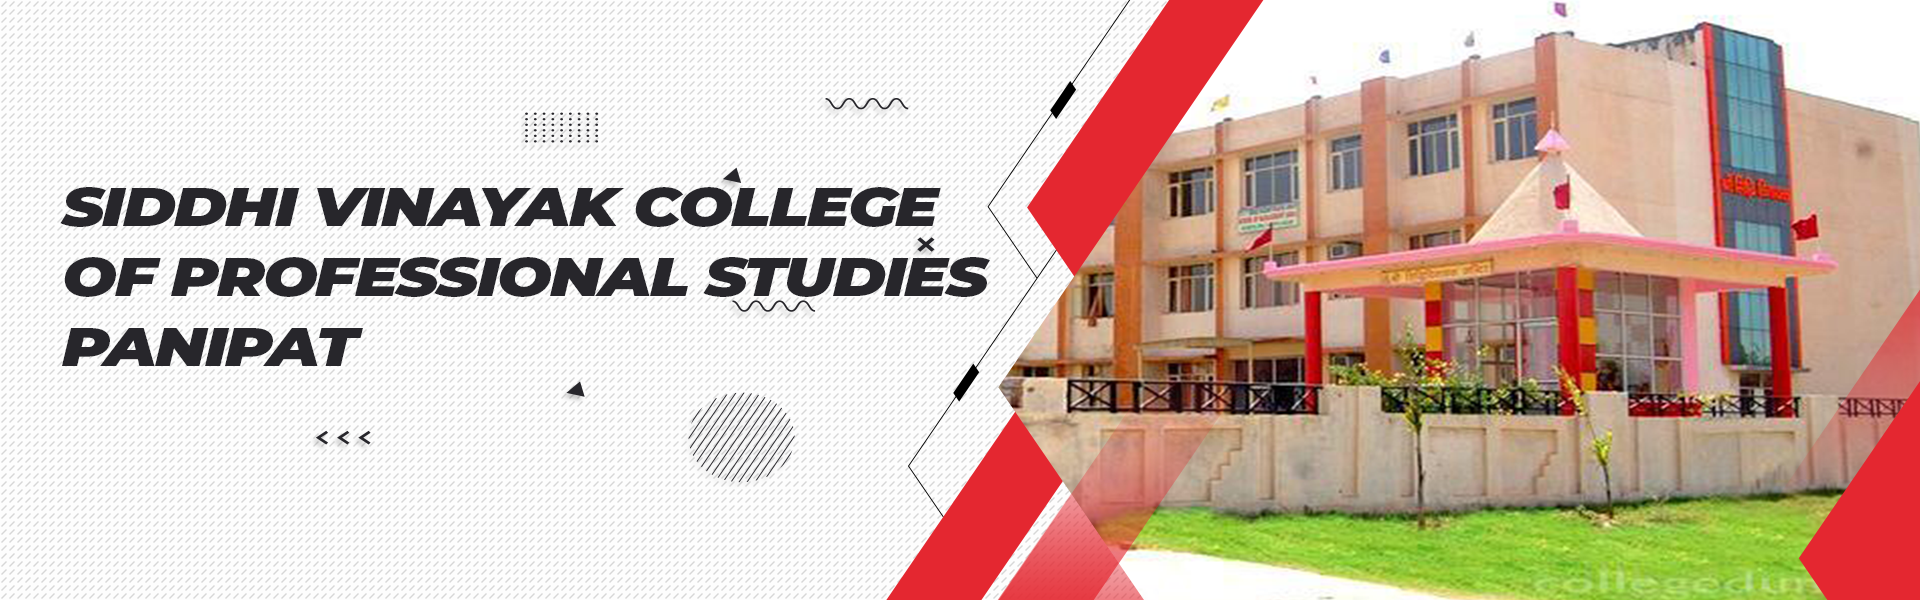 Siddhi Vinayak College Of Professional Studies, Panipat